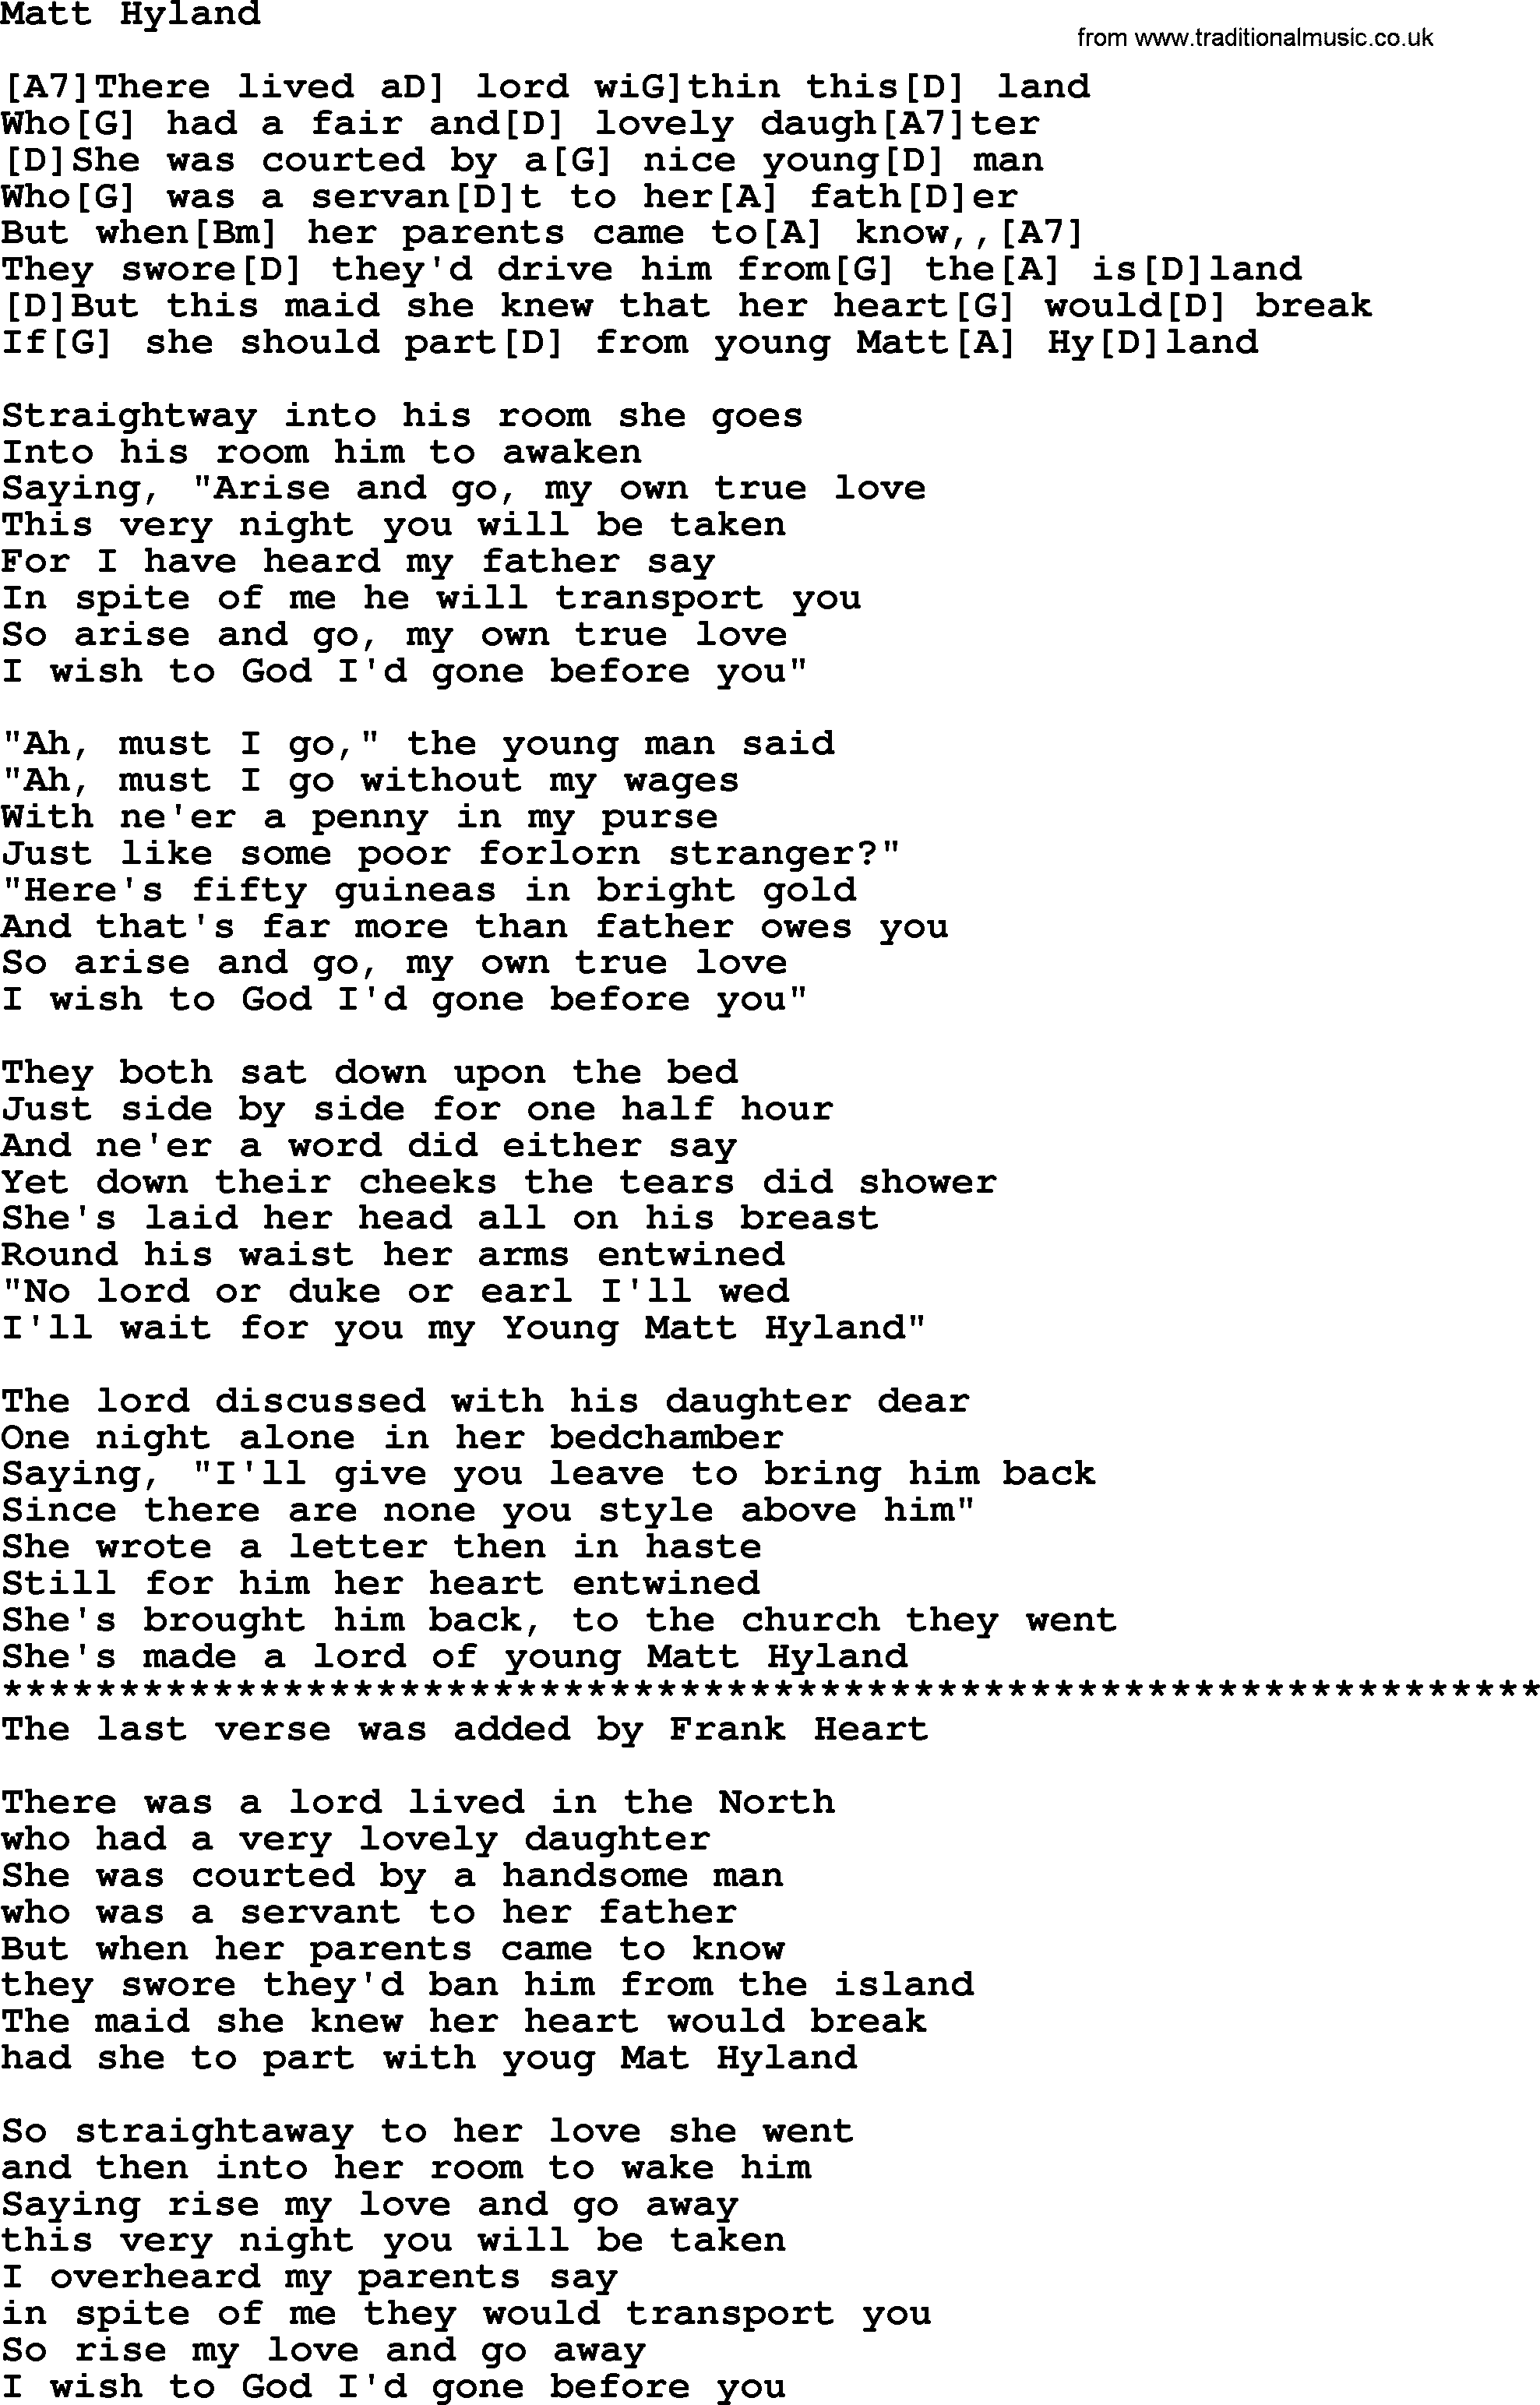 The Dubliners song: Matt Hyland, lyrics